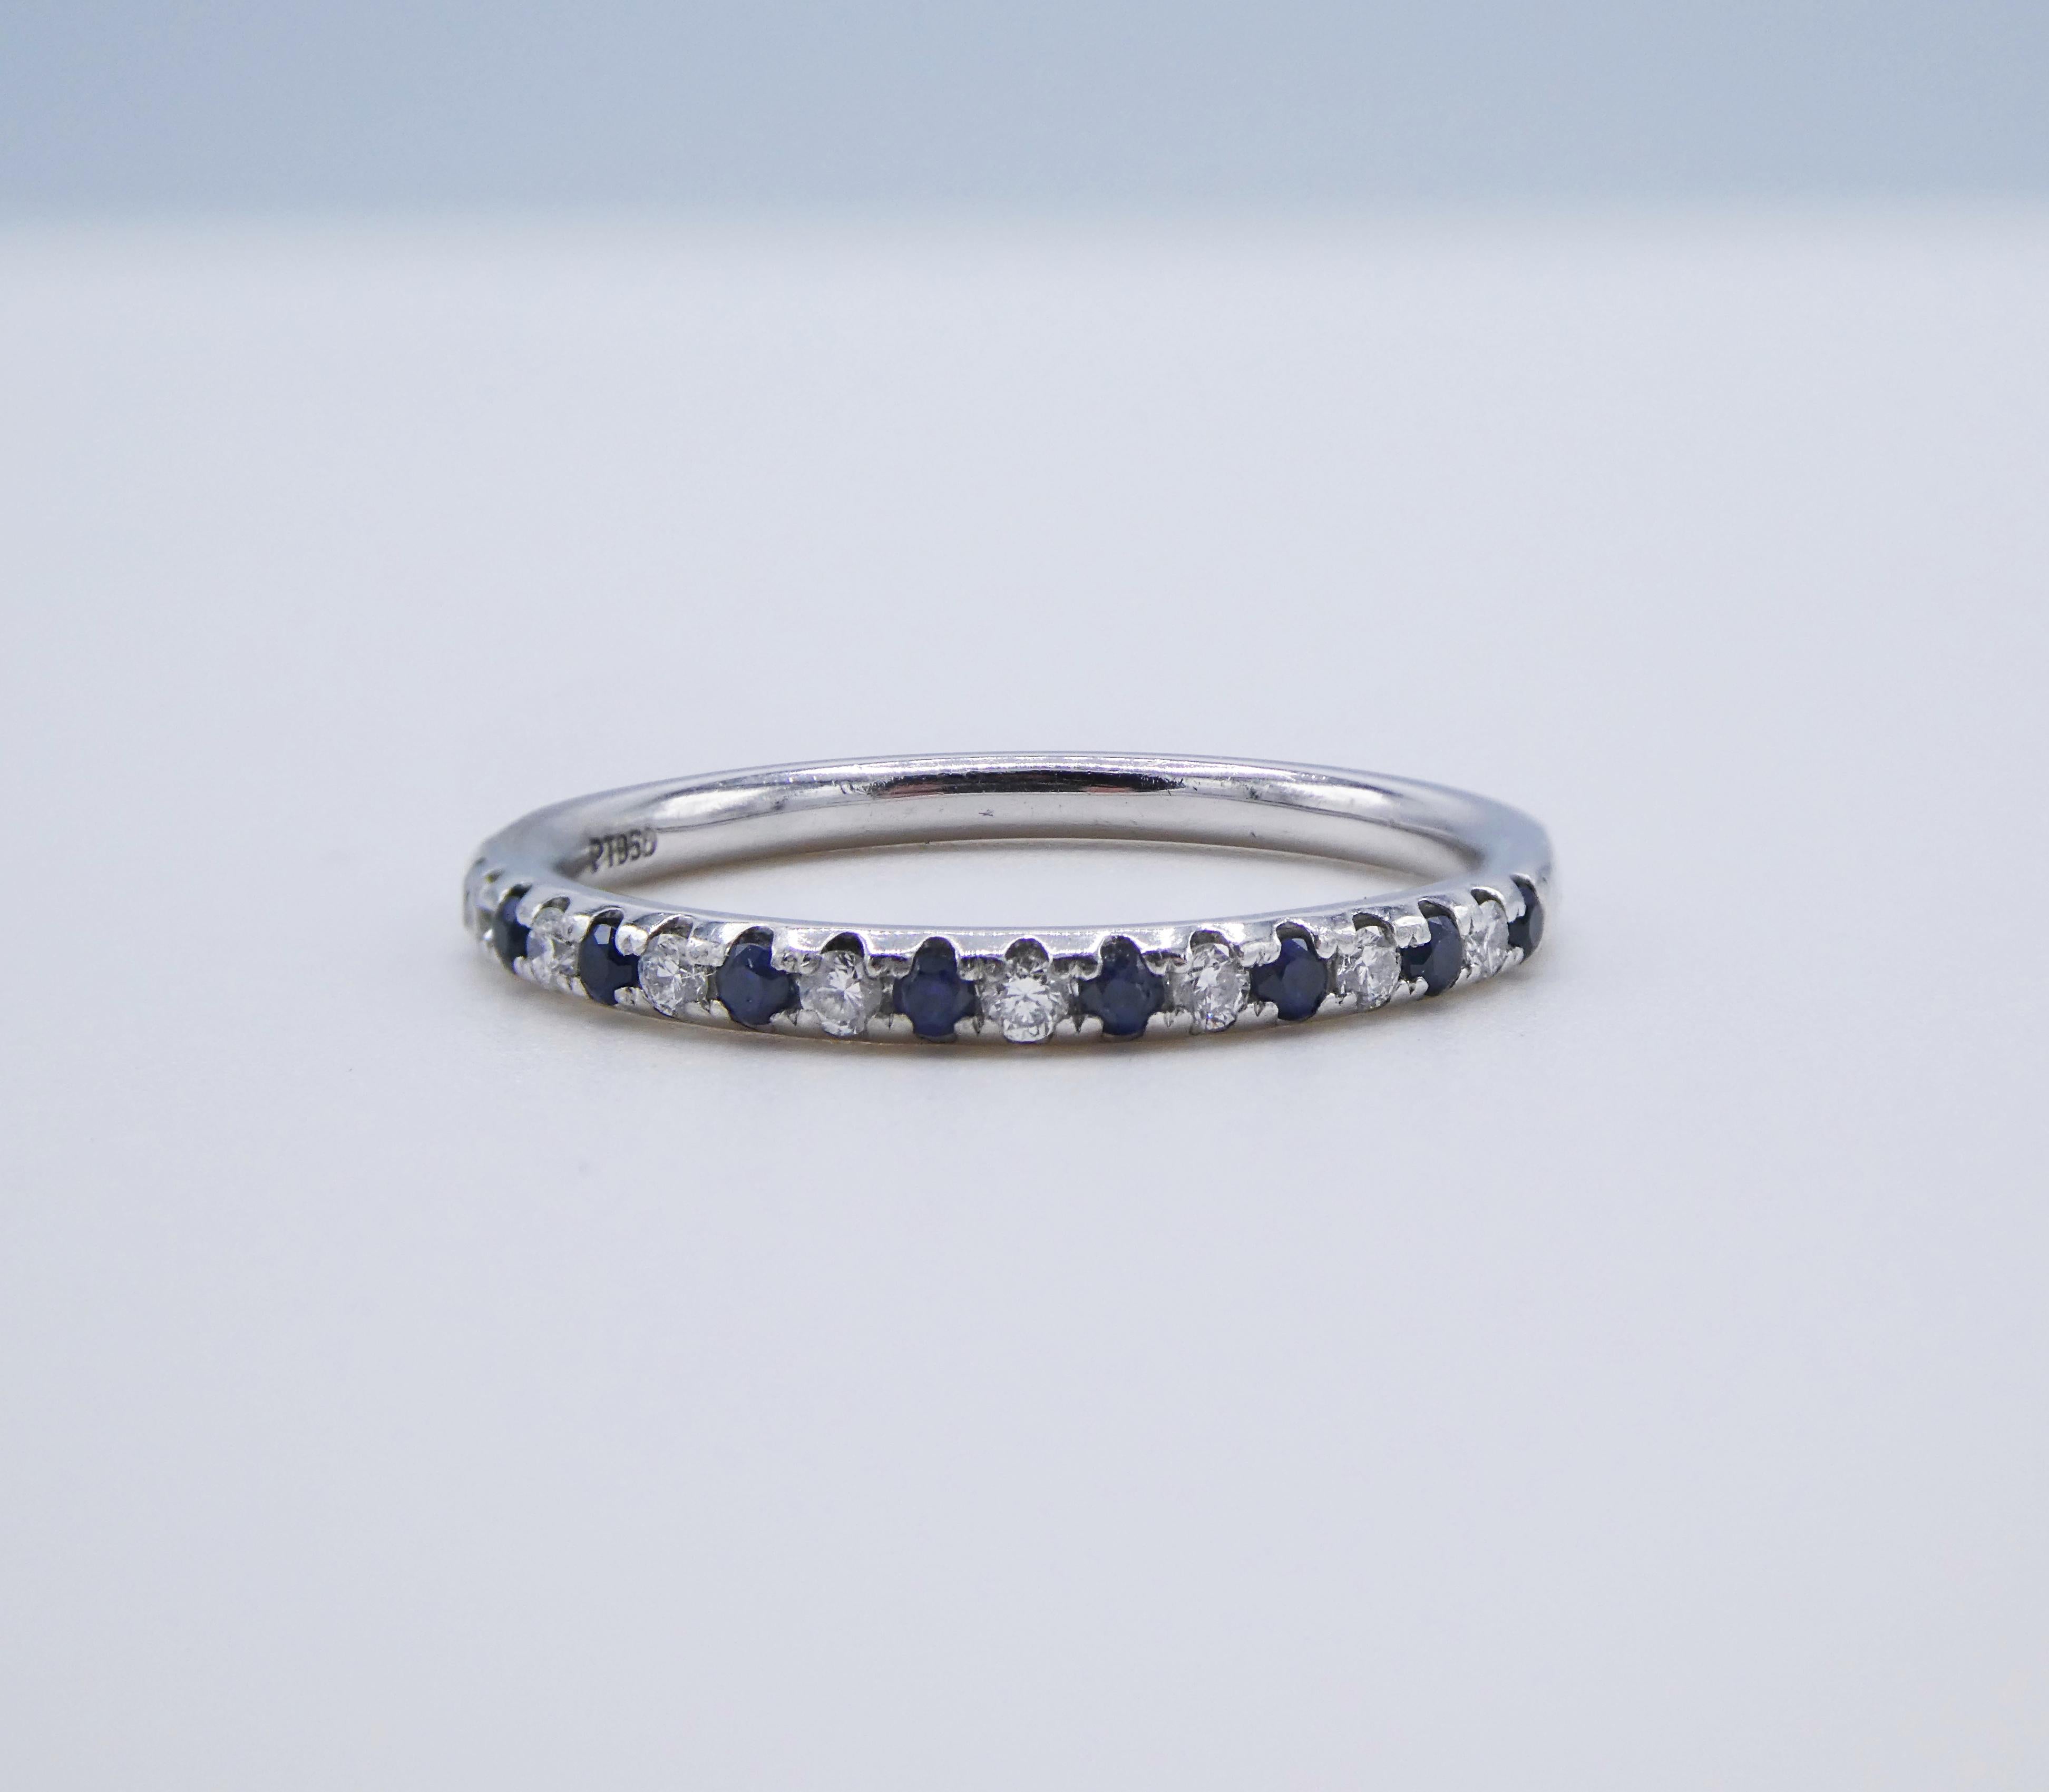 Platinum Natural Diamond & Blue Sapphire Wedding Band Ring Size 7
Metal: Platinum PT950
Weight: 3.25 grams
Diamonds: .10 CTW G VS natural diamonds
Band is 2mm wide
Size: 7 (US)
Blue Nile hallmark